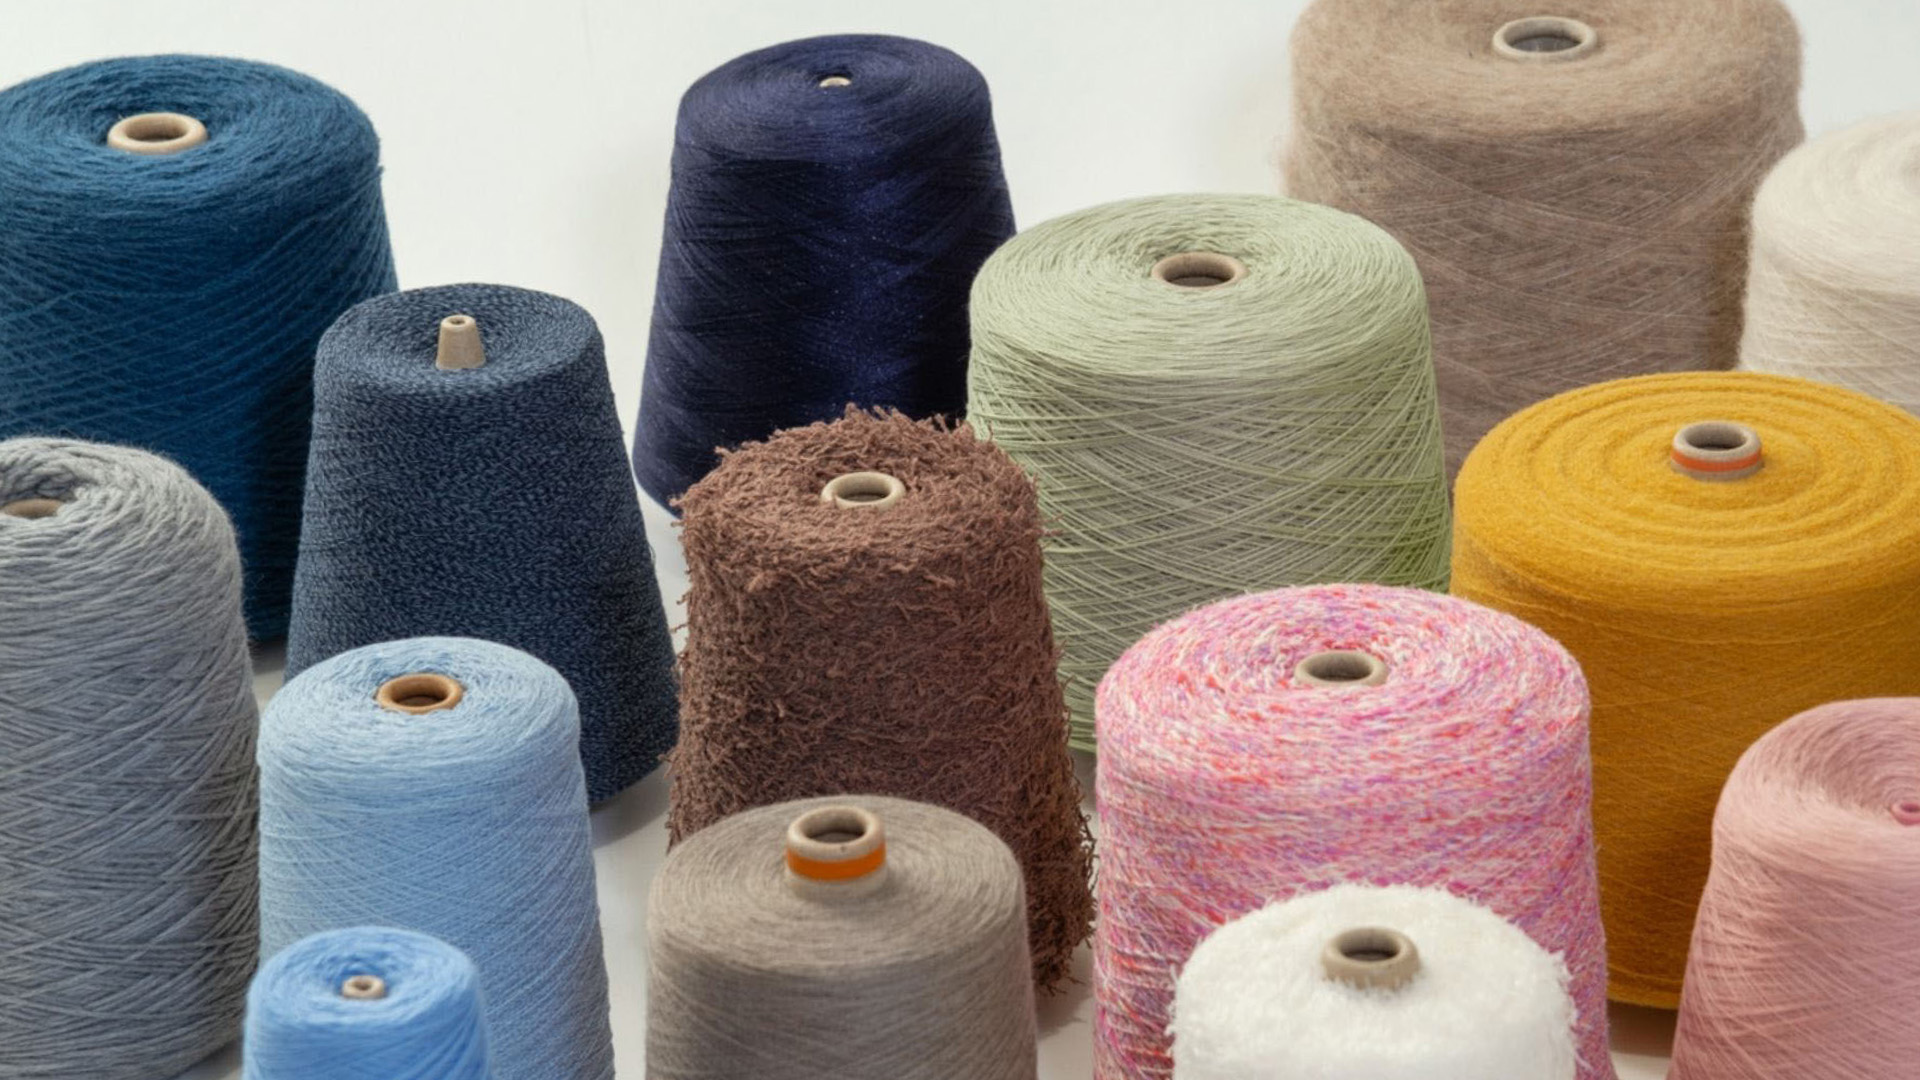 Yarn01,Dongguan Haihongsheng Textile Co., Ltd.